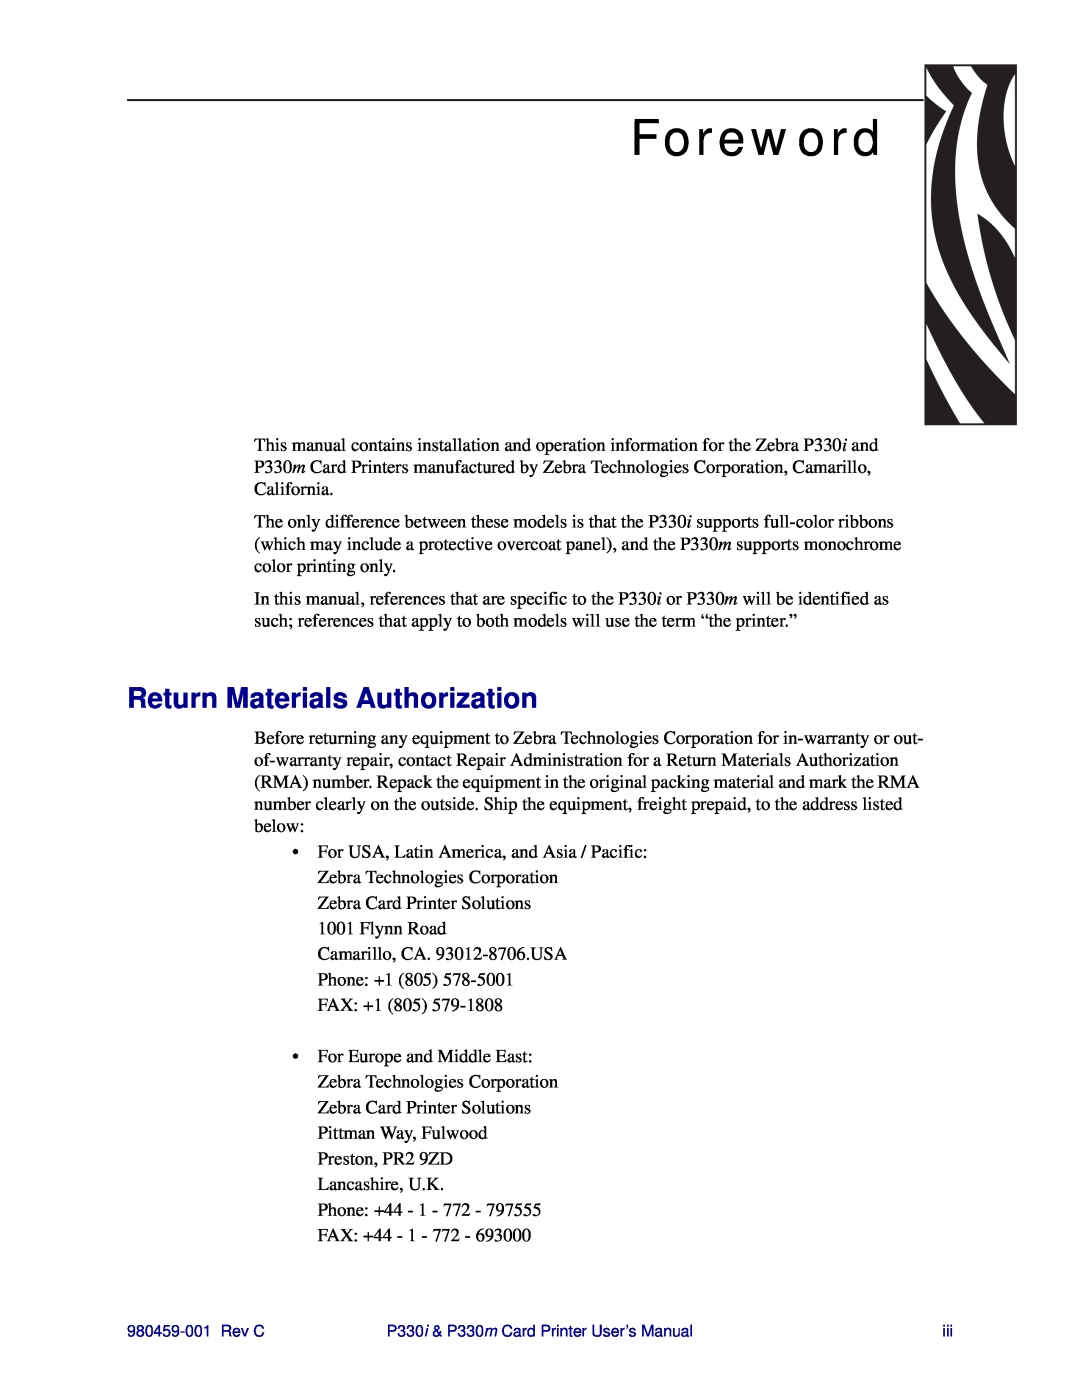 Zebra Technologies P330m, P330i user manual Foreword, Return Materials Authorization 